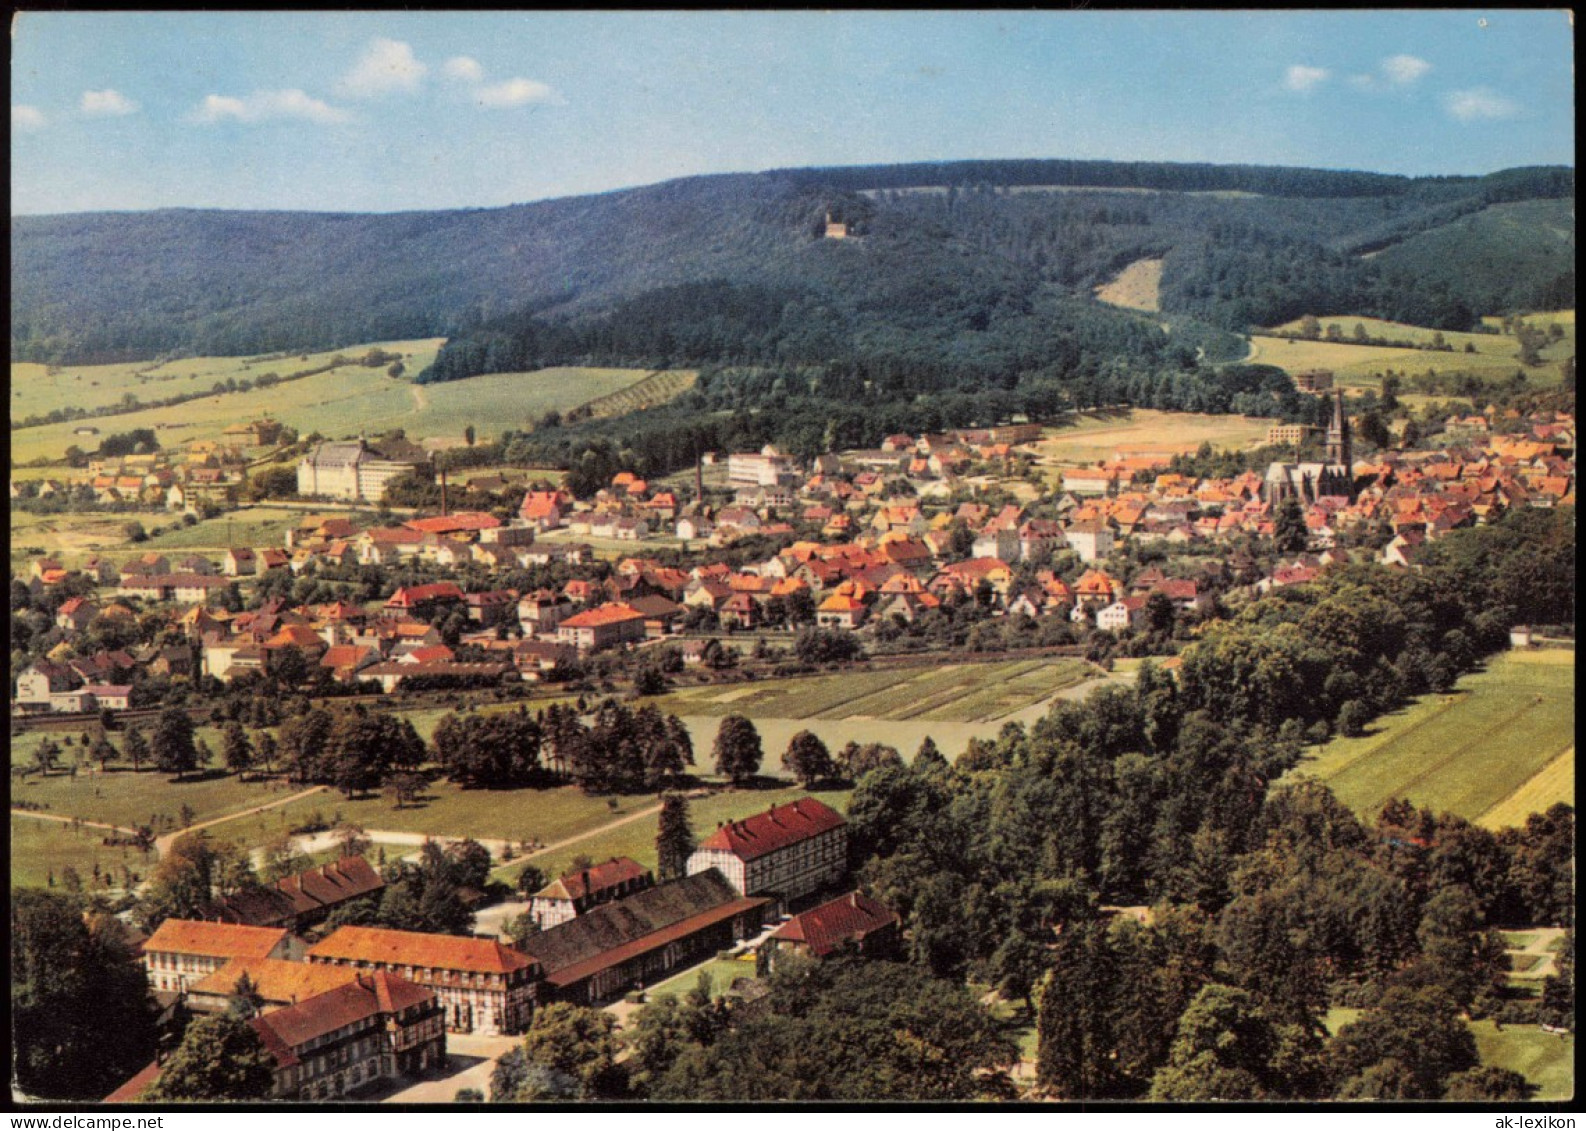 Ansichtskarte Bad Driburg Luftbild Luftaufnahme 1970 - Bad Driburg